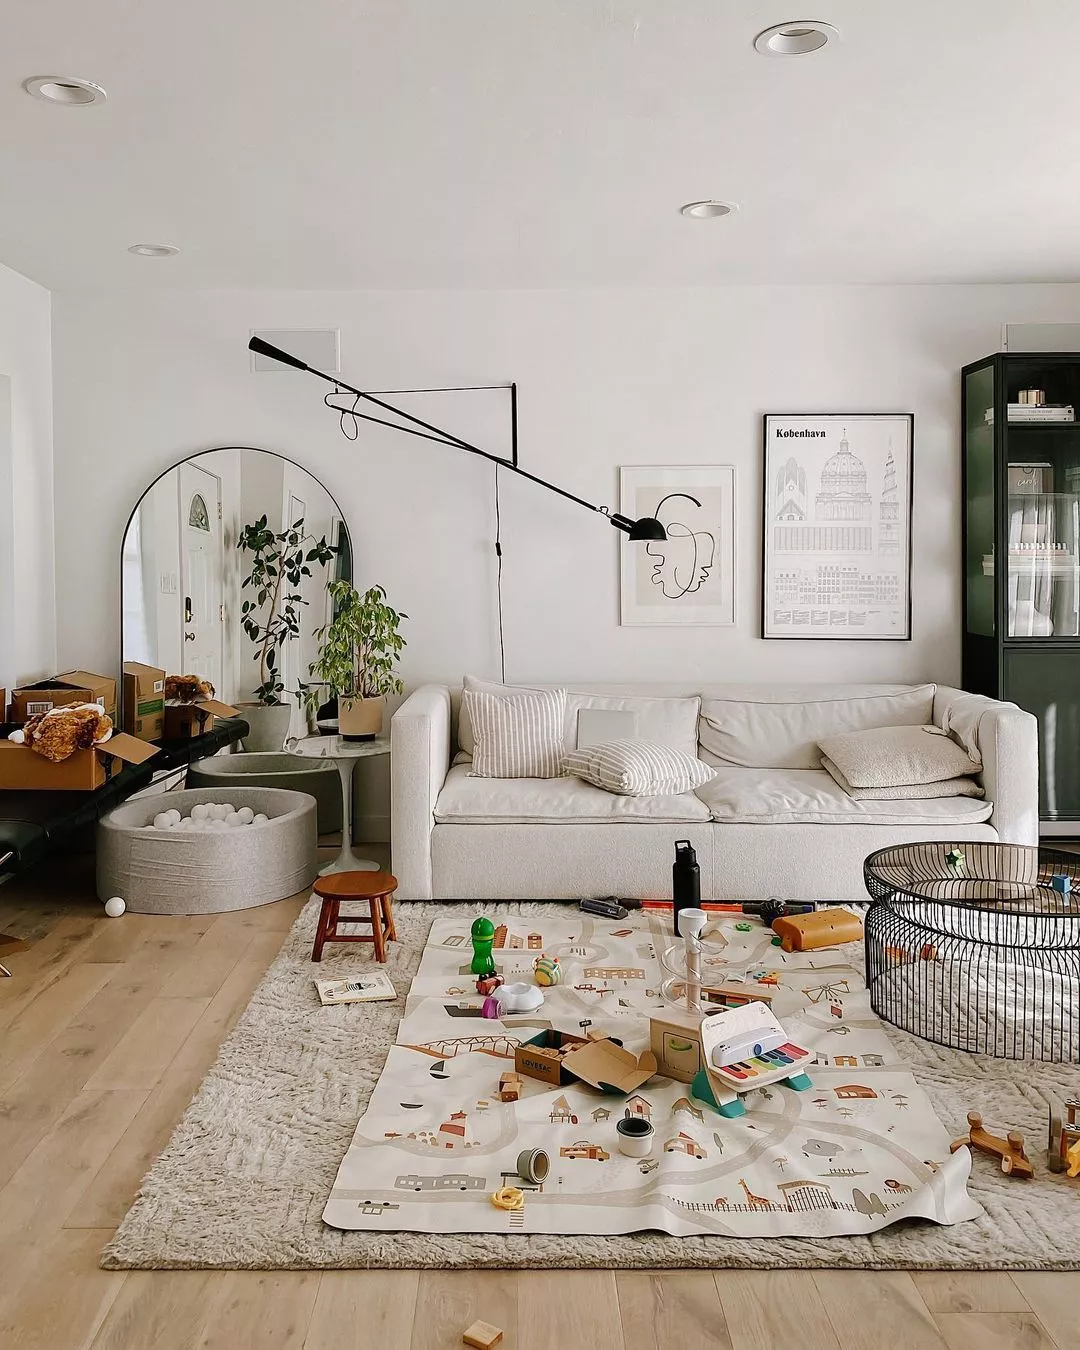 Home Decor Ideas: How do I baby-proof my home?